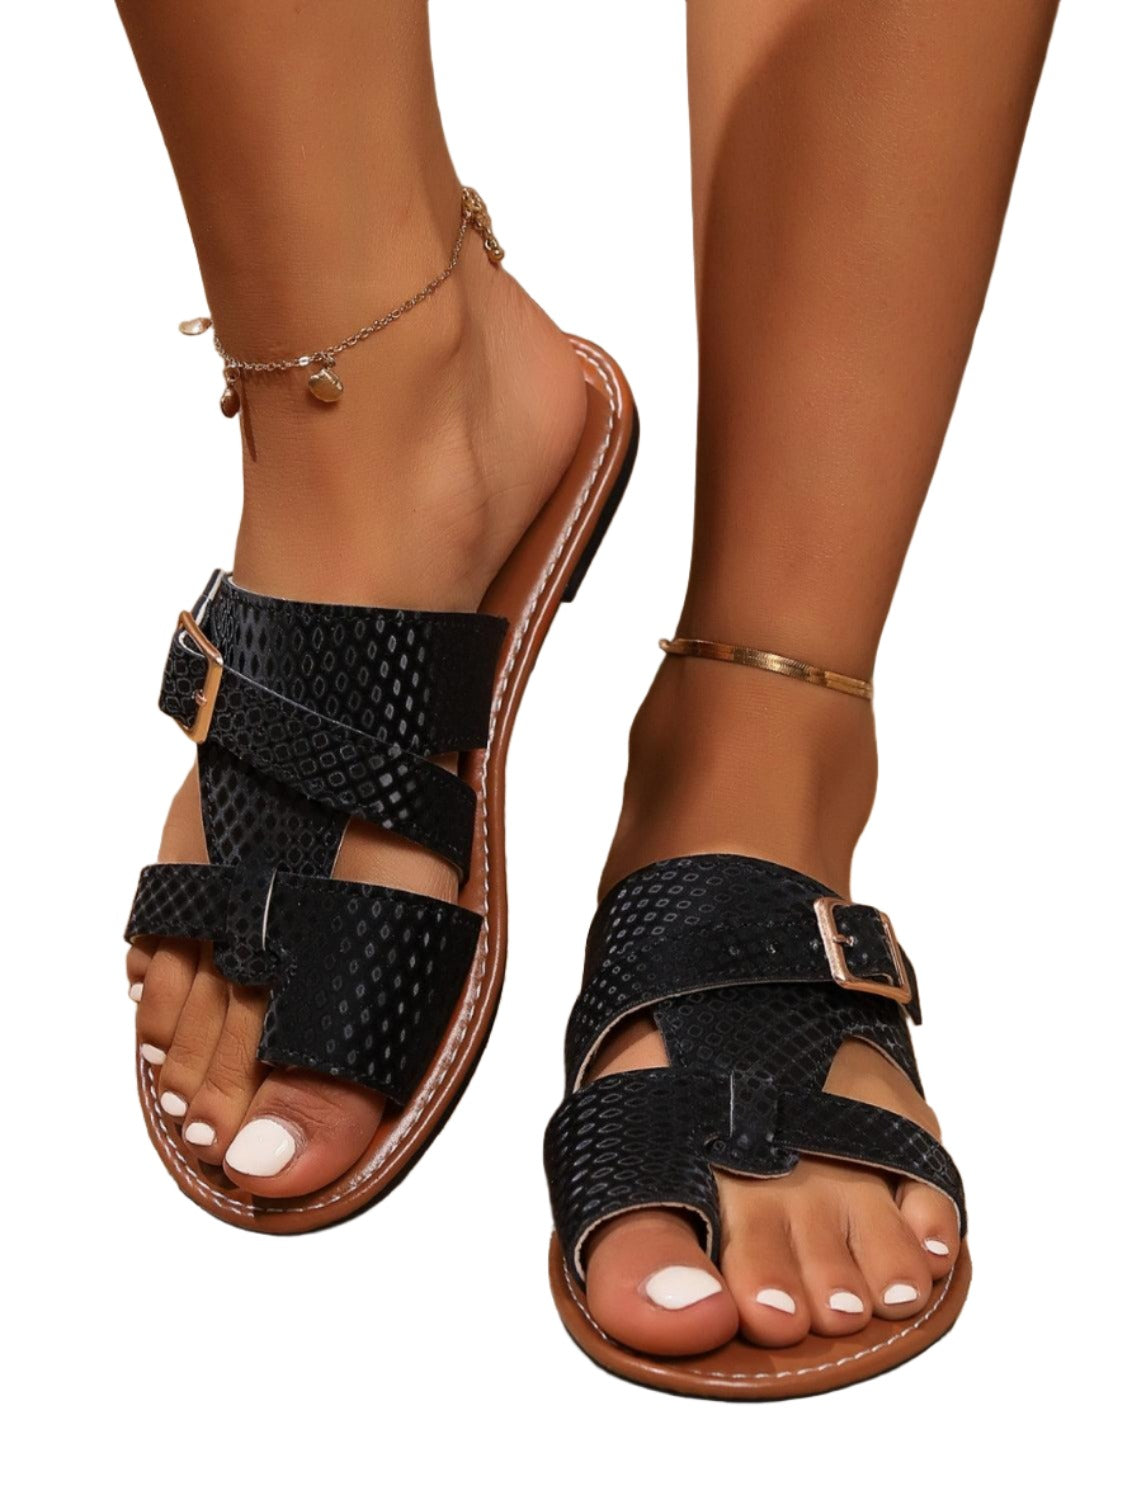 Women's Shoes - Sandals PU Leather Open Toe Sandals